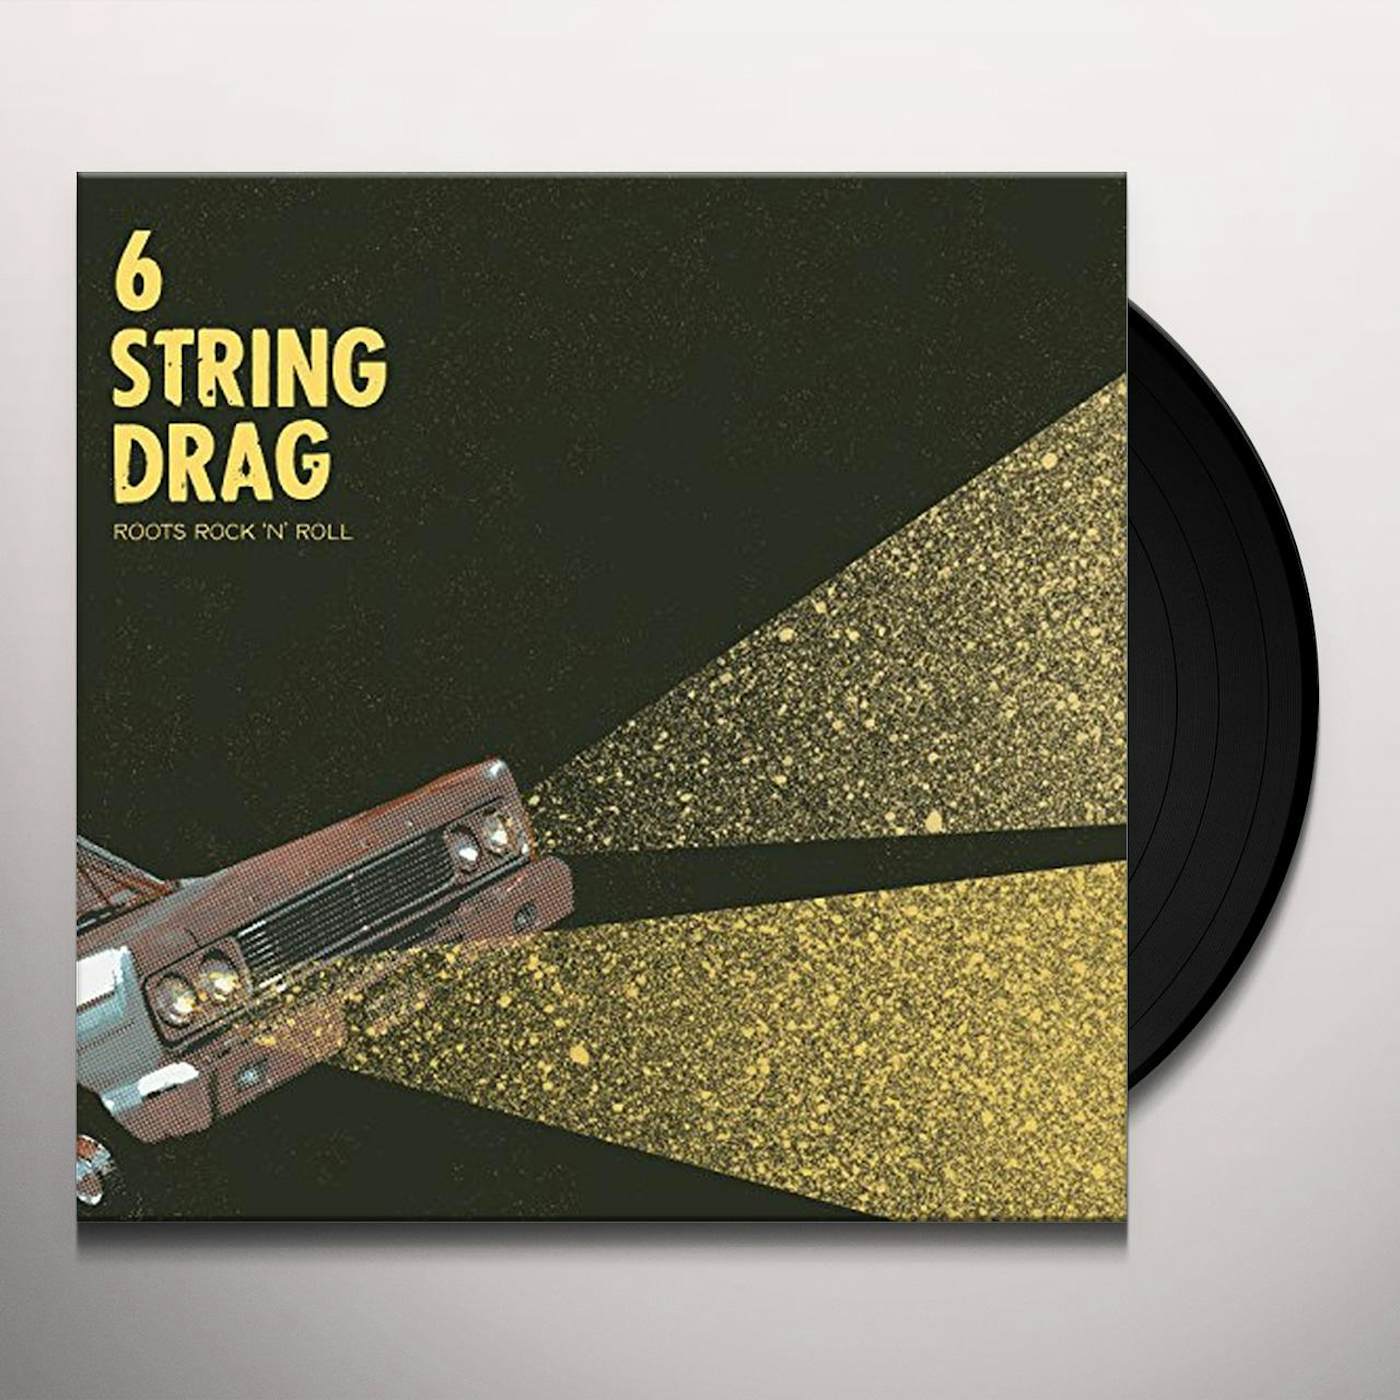 6 String Drag Roots Rock 'N' Roll Vinyl Record